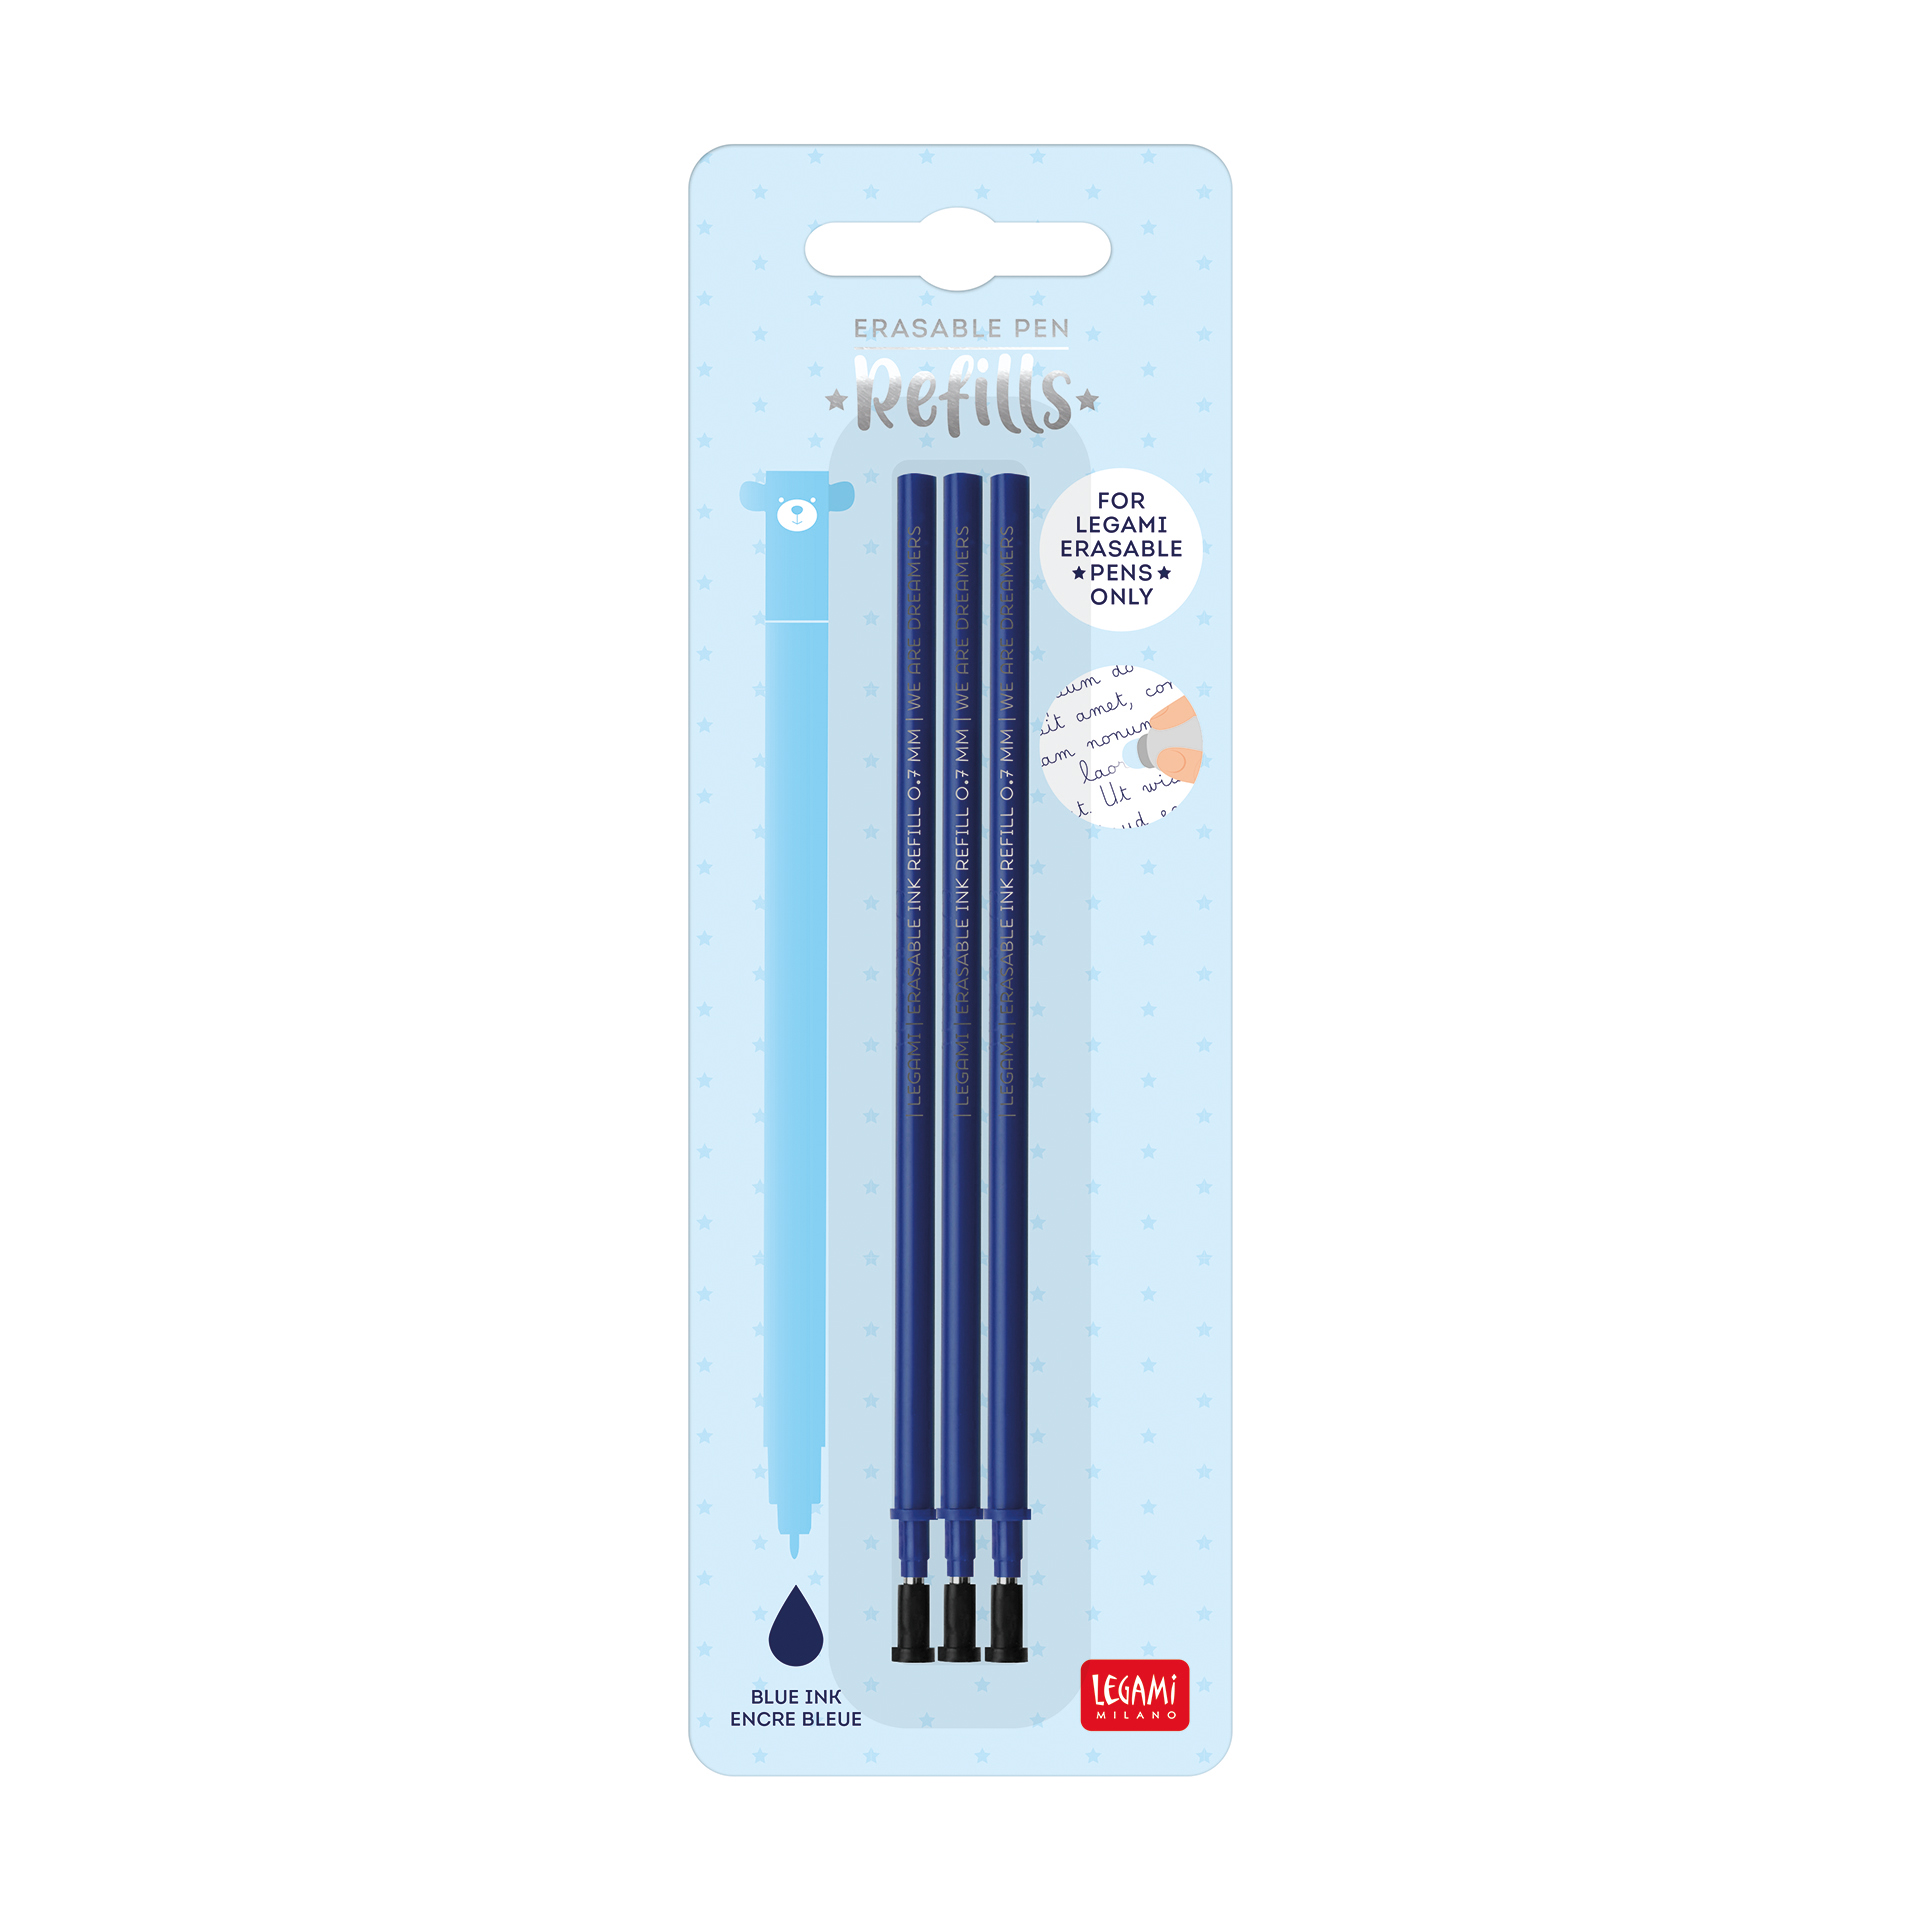 Refills for erasable pen blue